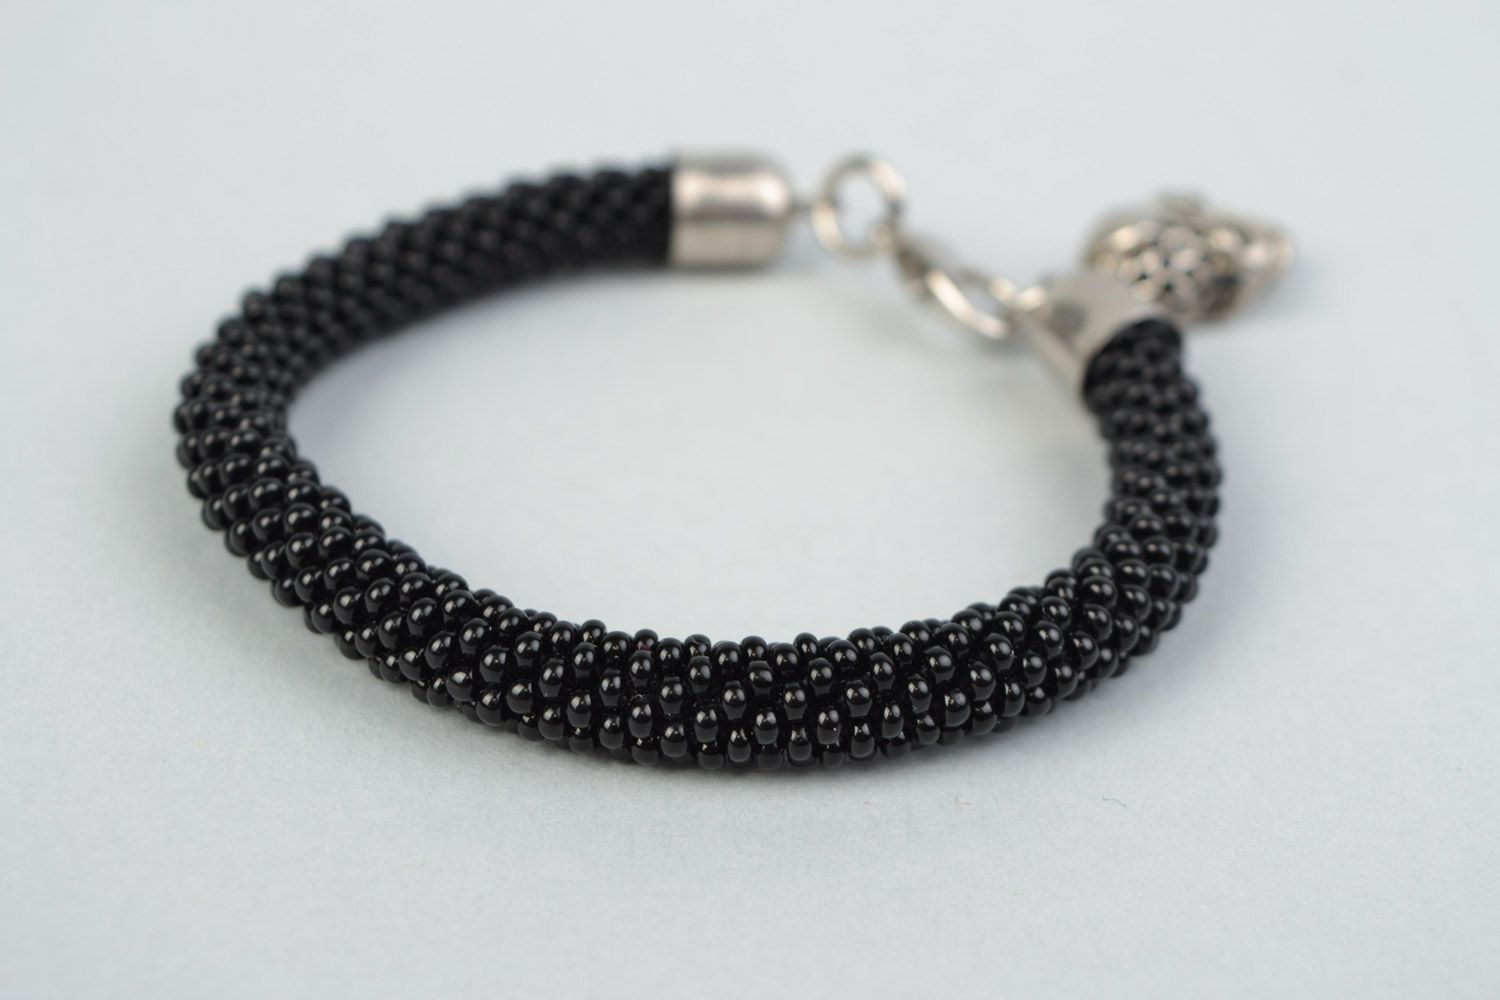 Handmade beaded cord women's wrist bracelet in black color with skull charm photo 3